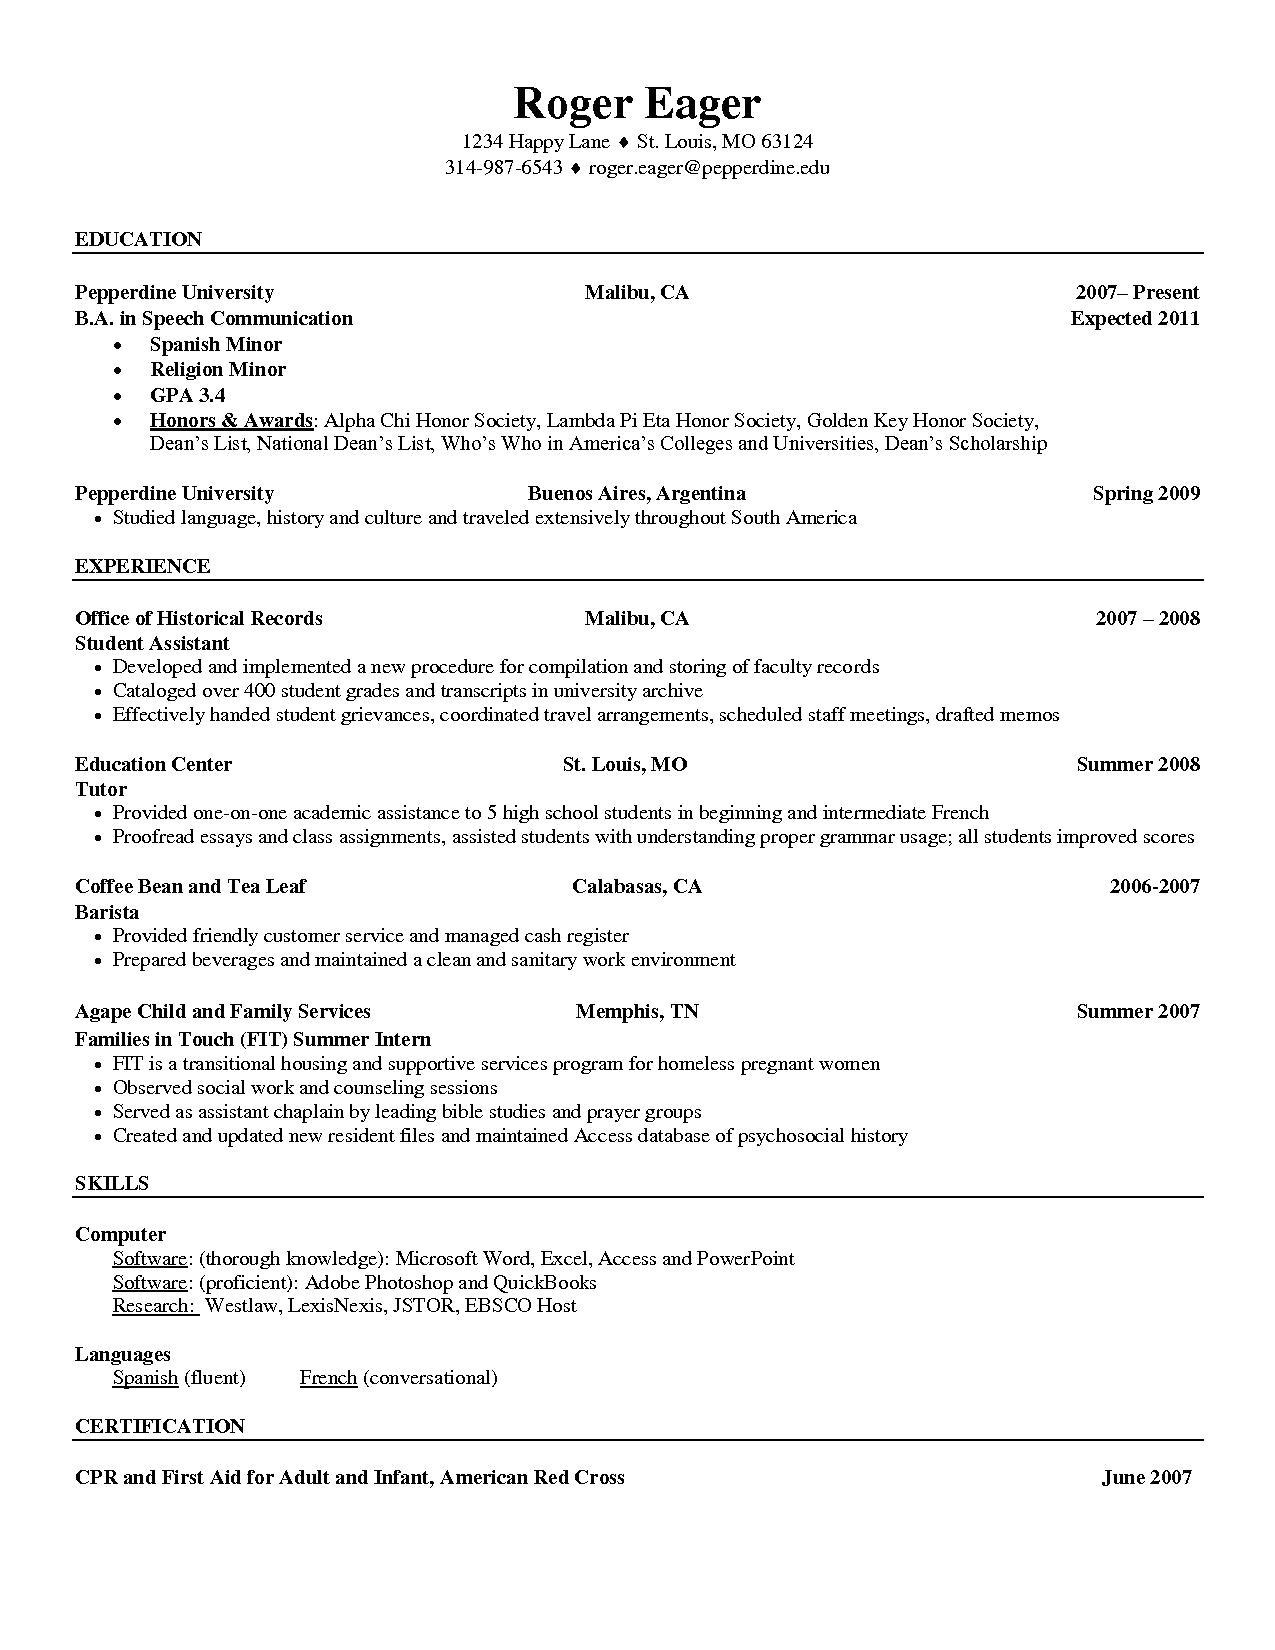 Sample Resume for Barista Position Barista Job Description Resume Samples